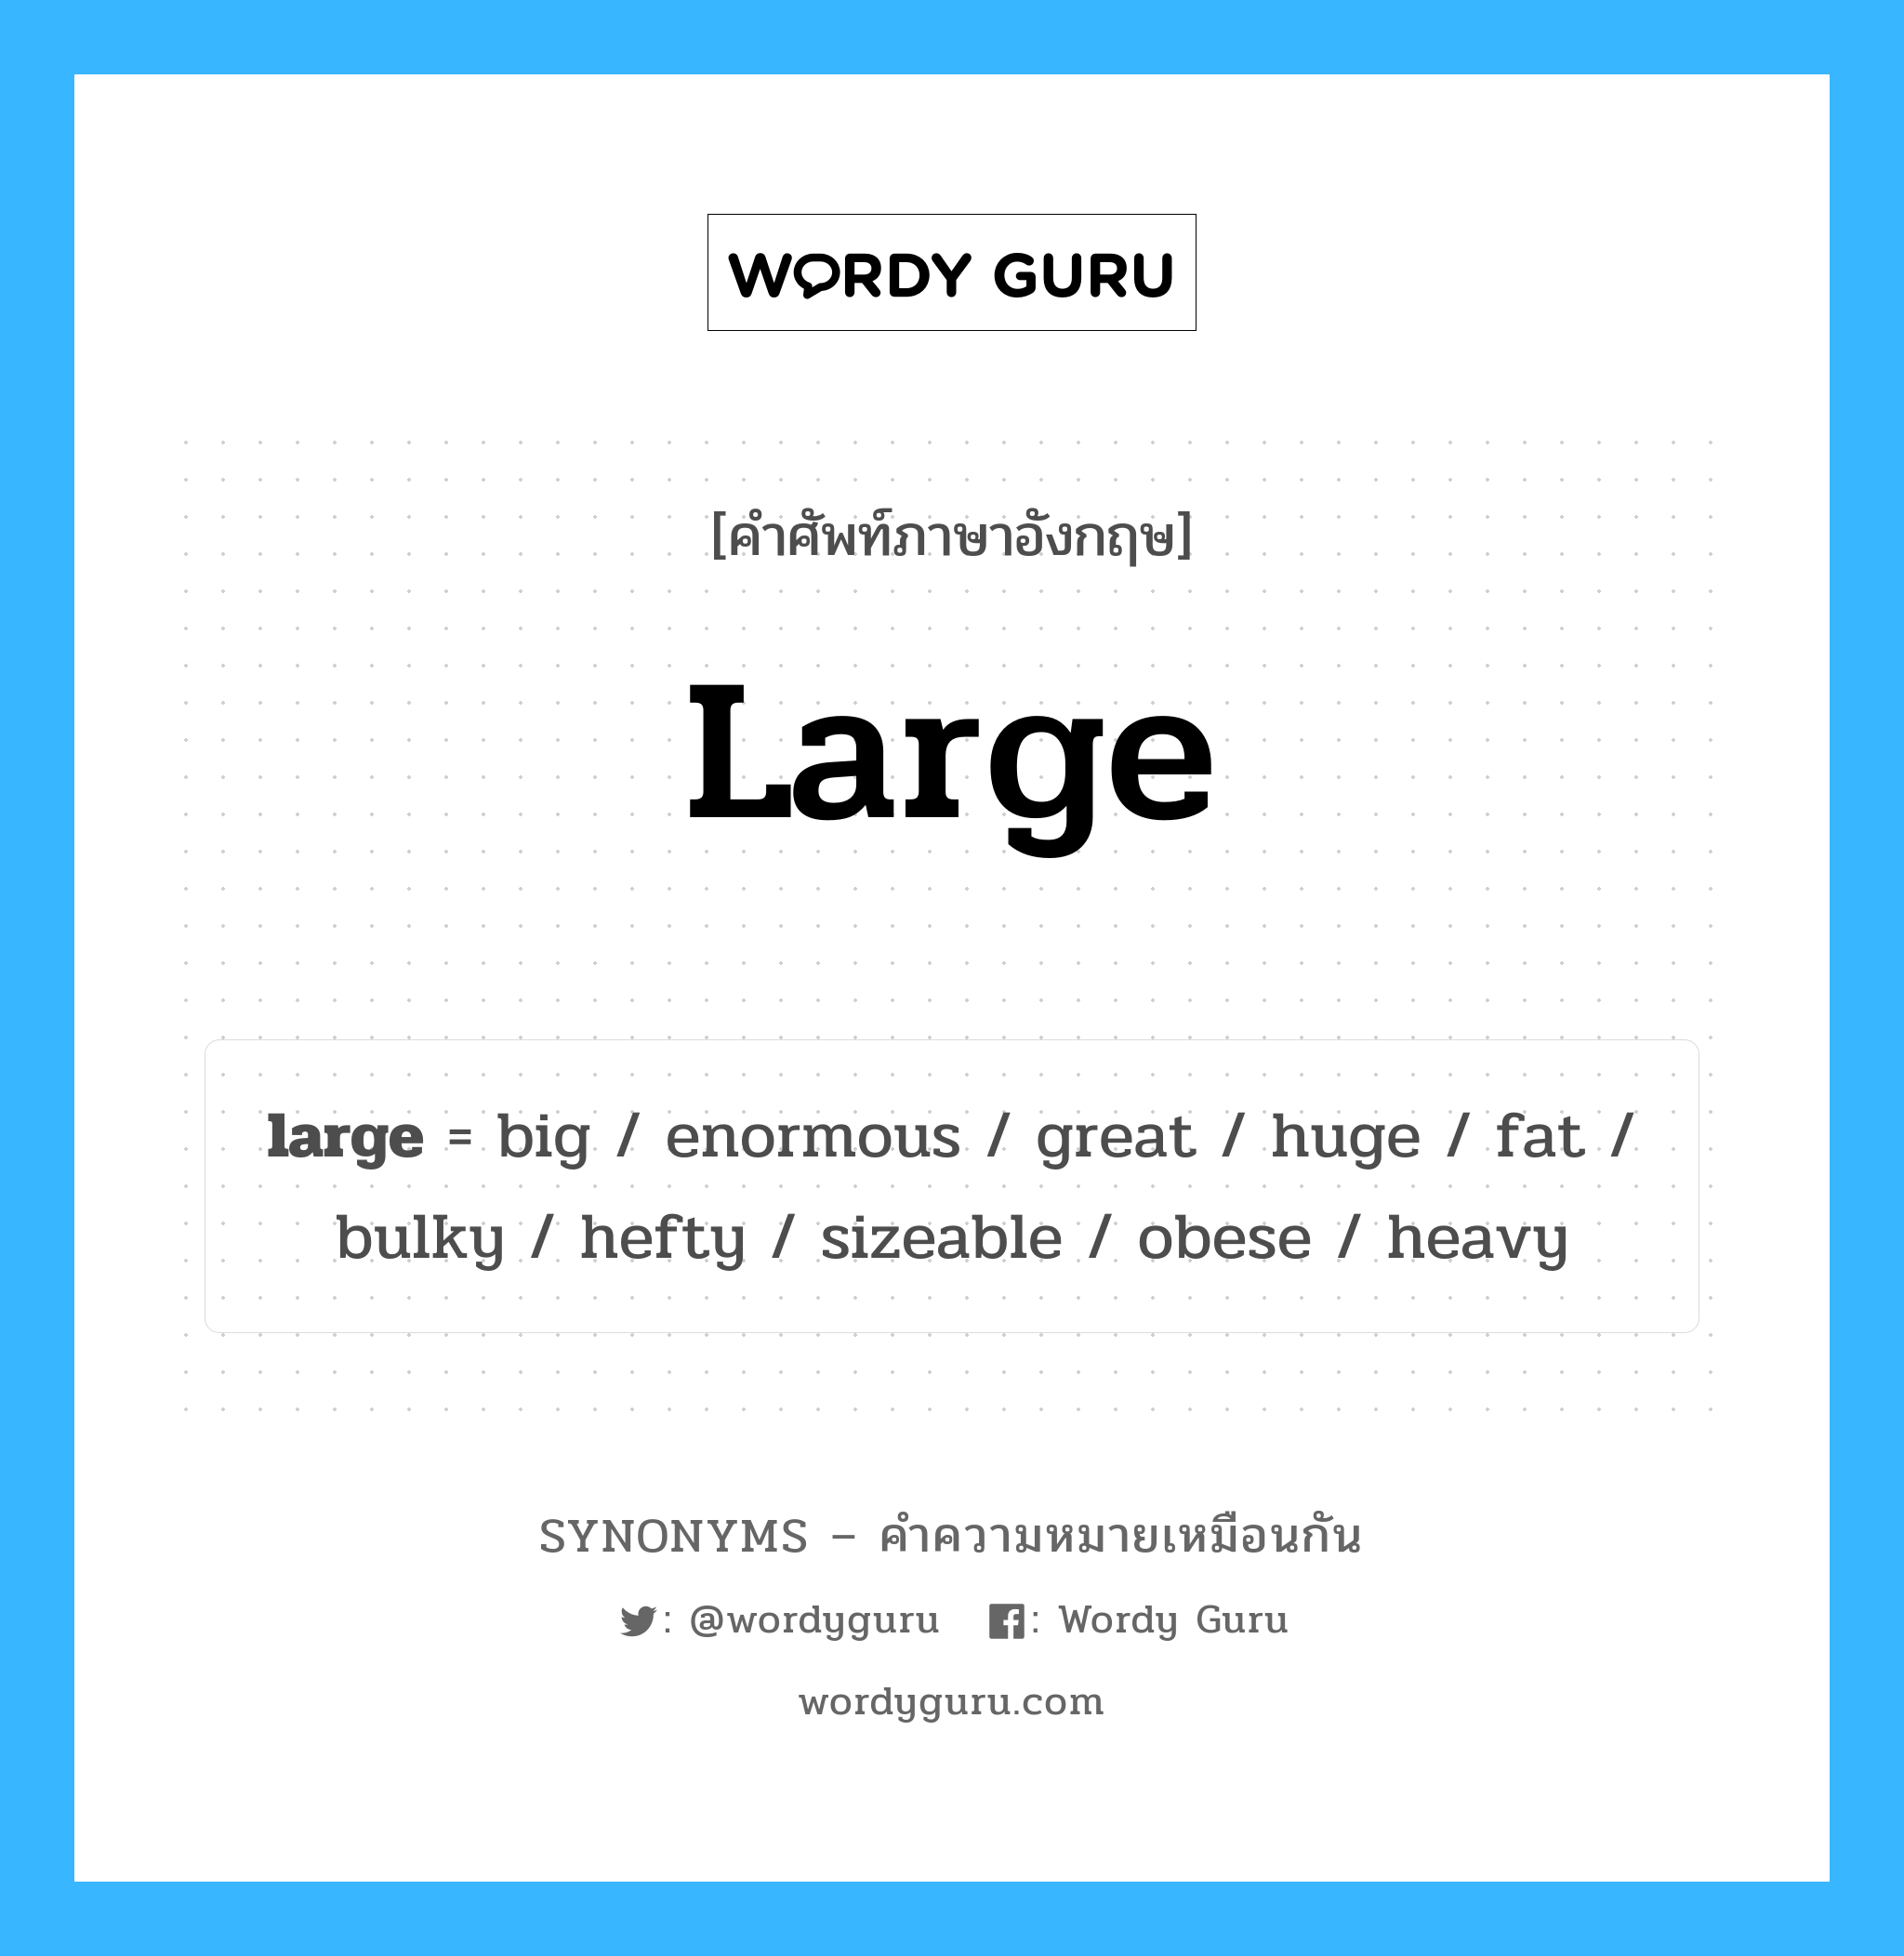 heavy เป็นหนึ่งใน large และมีคำอื่น ๆ อีกดังนี้, คำศัพท์ภาษาอังกฤษ heavy ความหมายคล้ายกันกับ large แปลว่า หนัก หมวด large